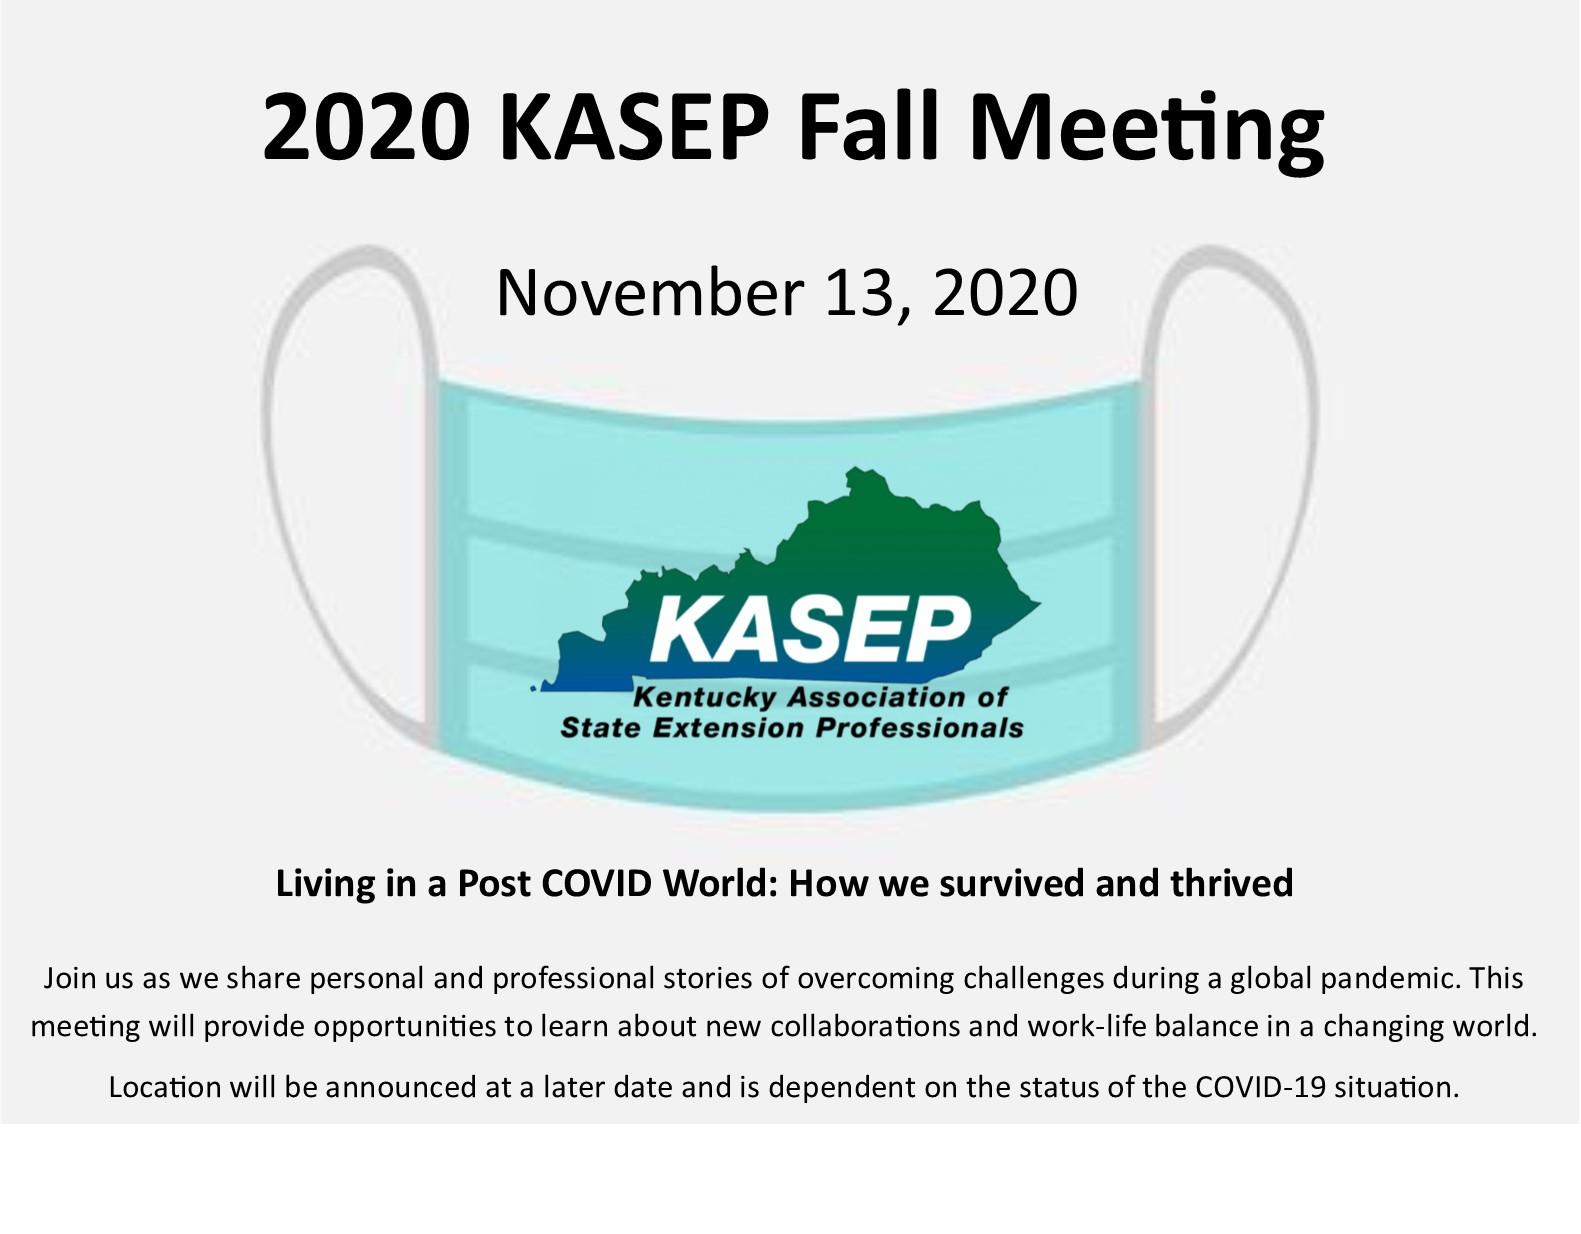 KASEP Fall 2020 meeting announcment